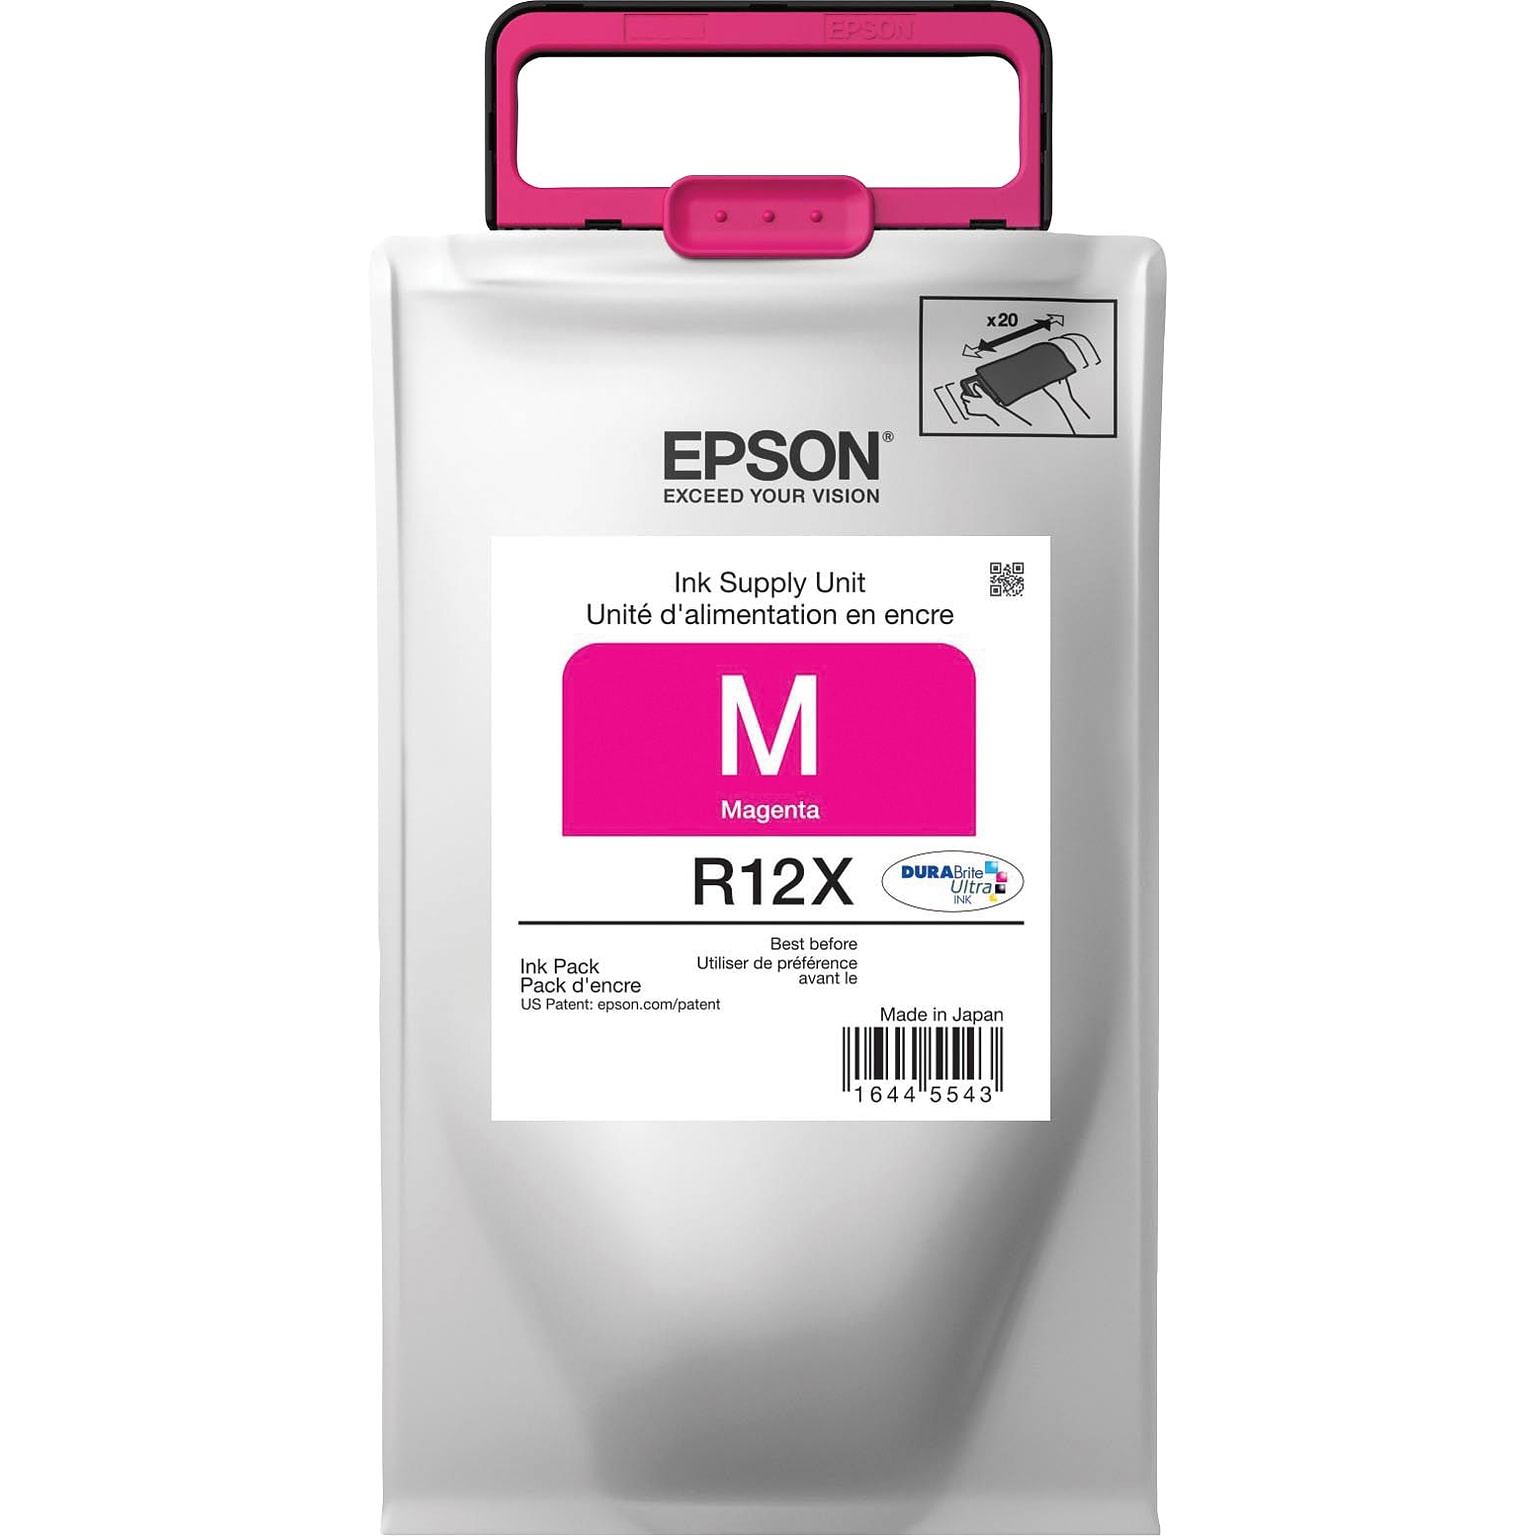 Epson R12X Magenta High Yield Ink Cartridge